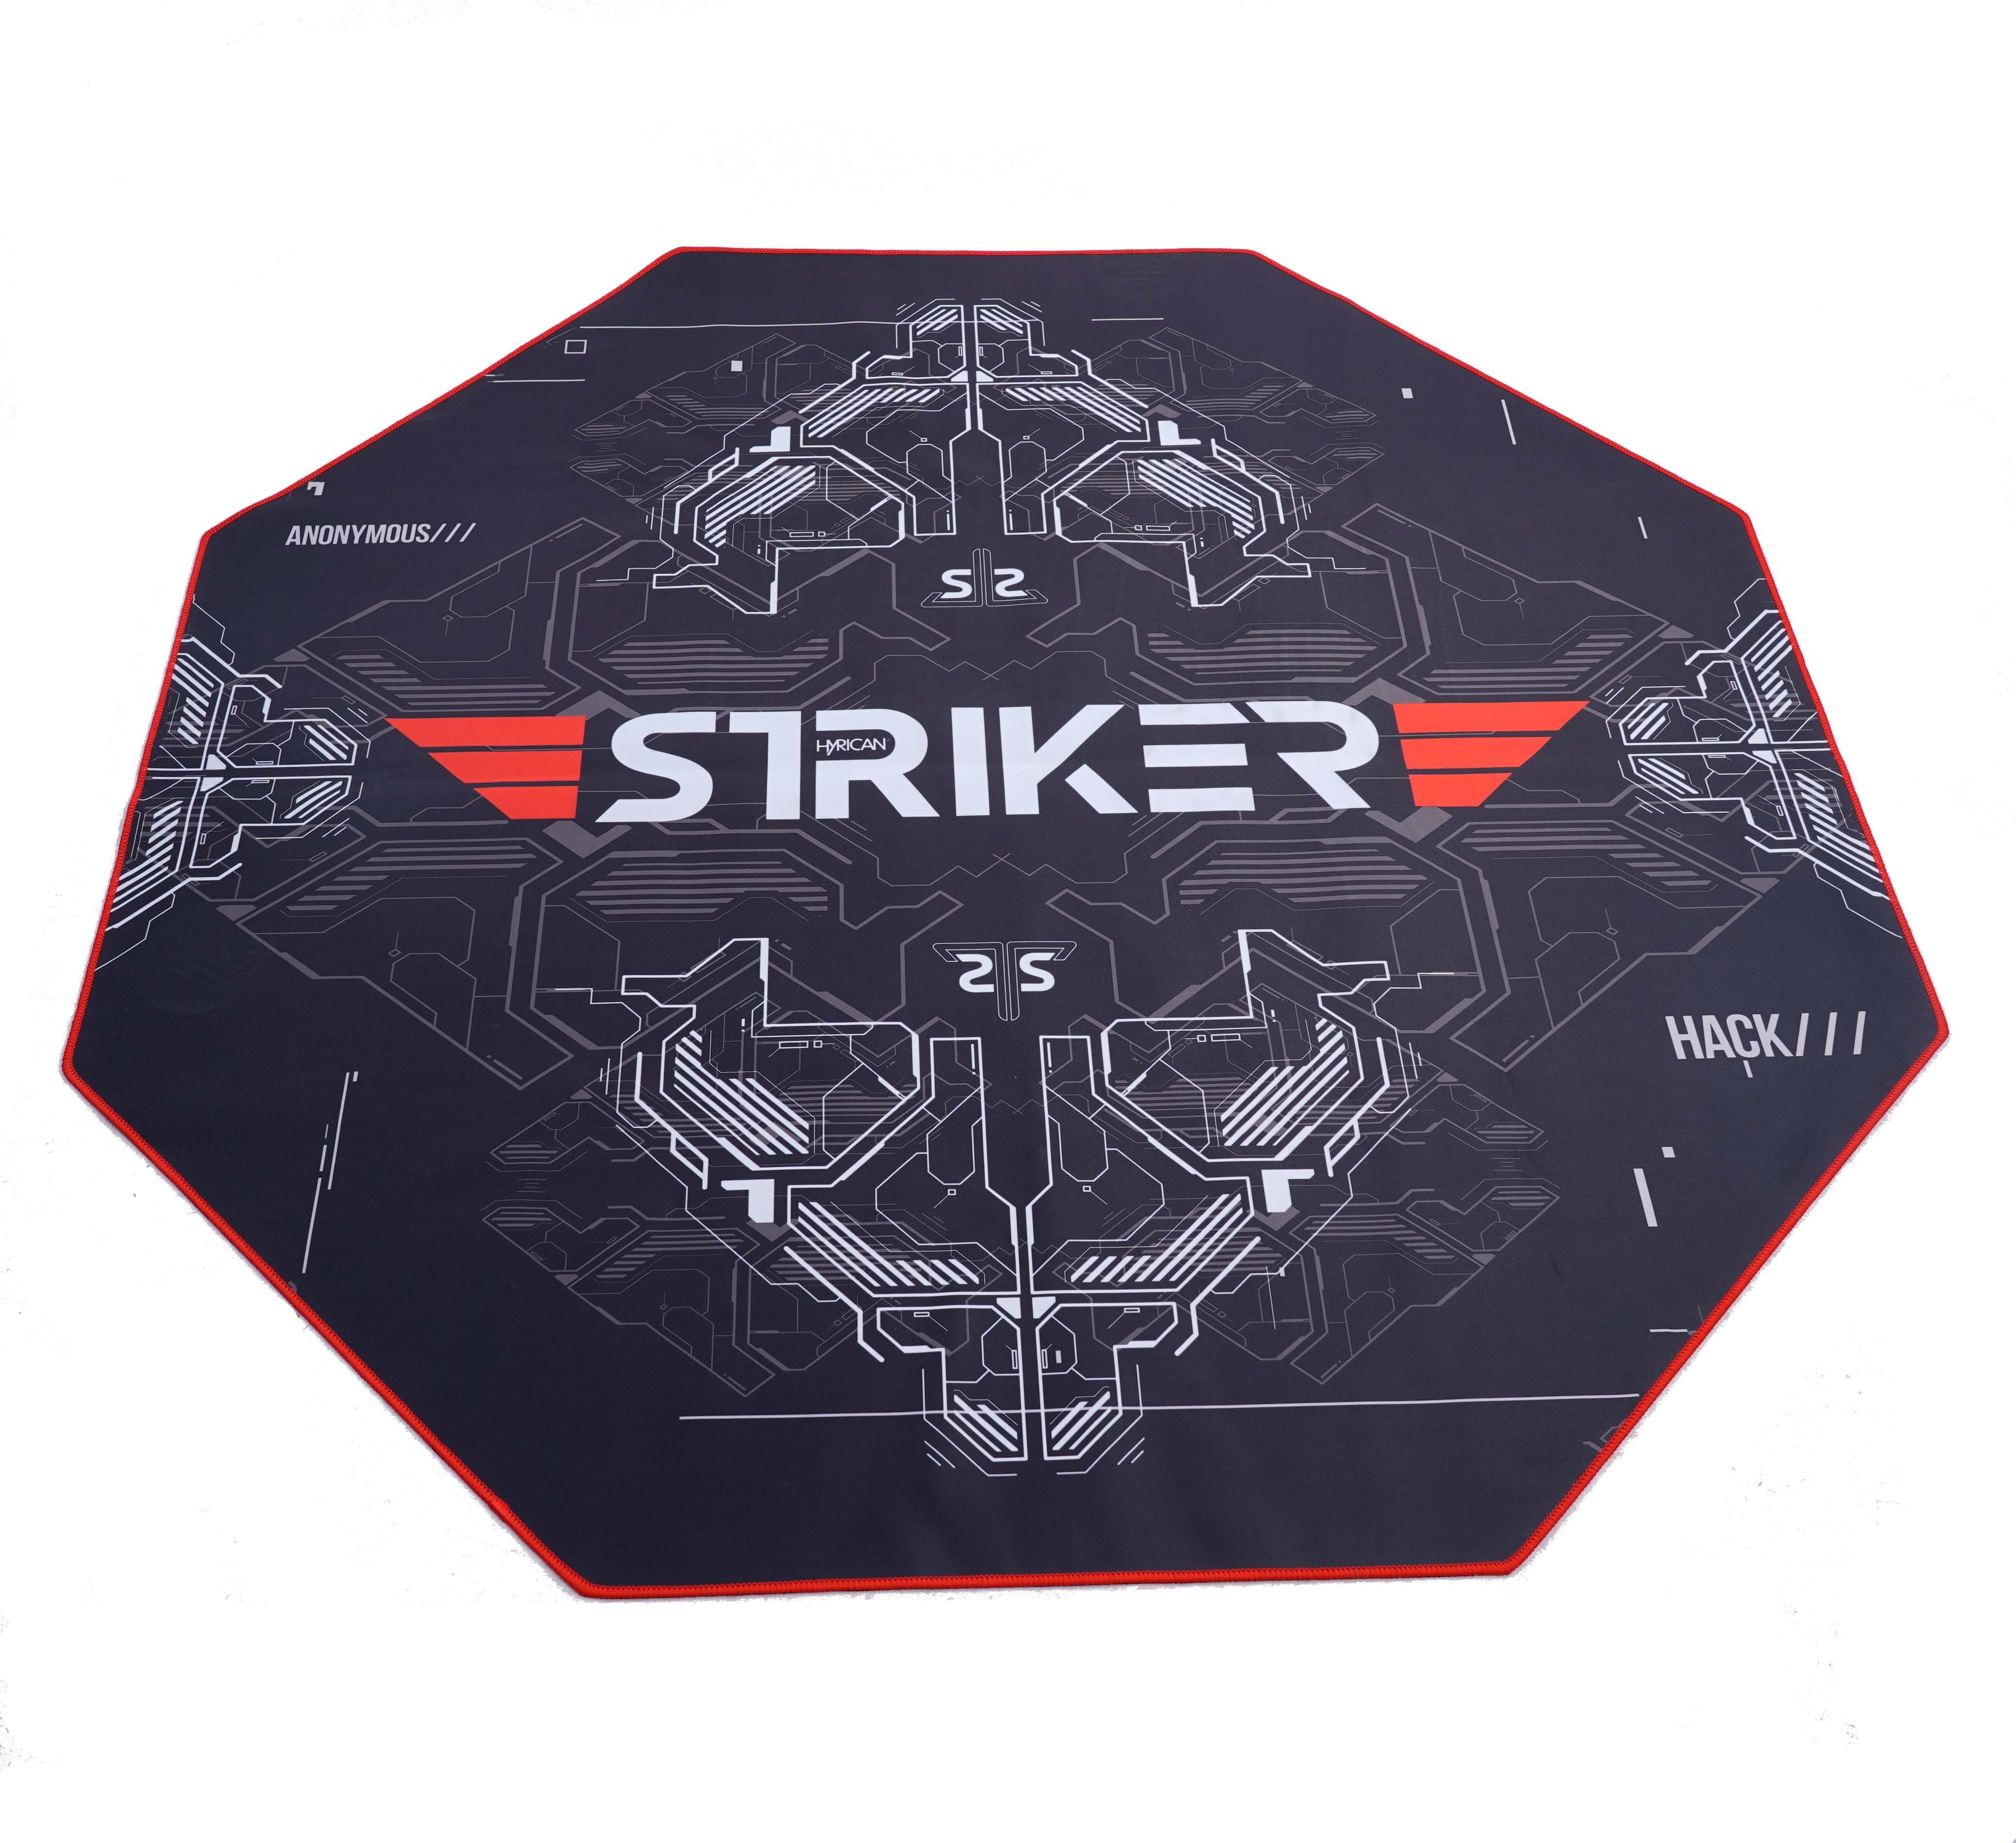 "Comander" Striker 3D-Armlehnen Hyrican Gaming-Stuhl ergonomischer Gaming-Stuhl Gamingstuhl,